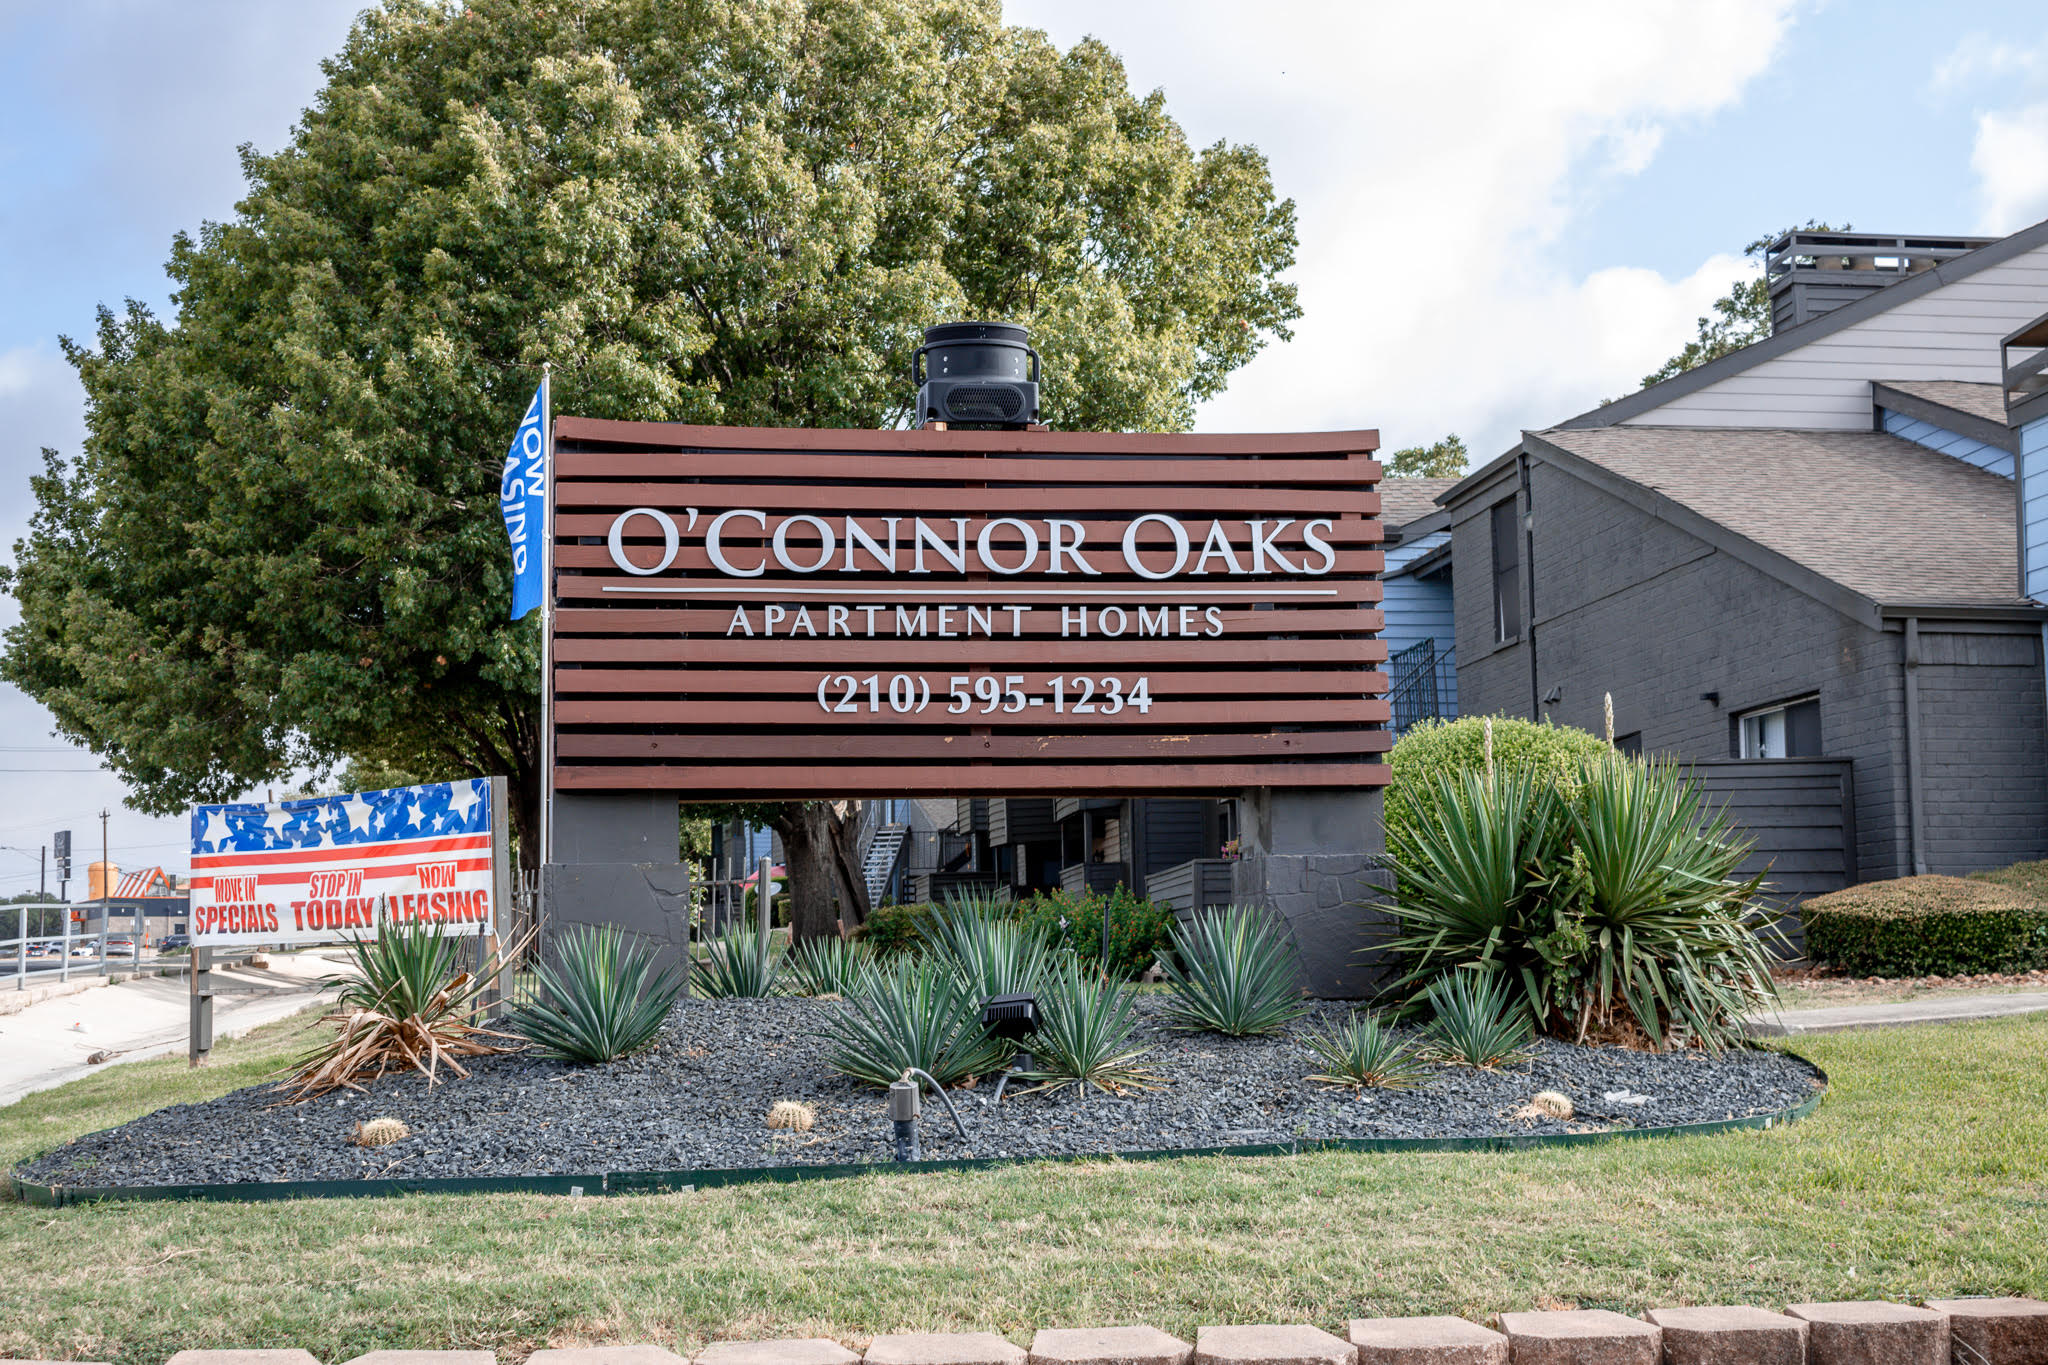 O'Connor Oaks Apartment Homes